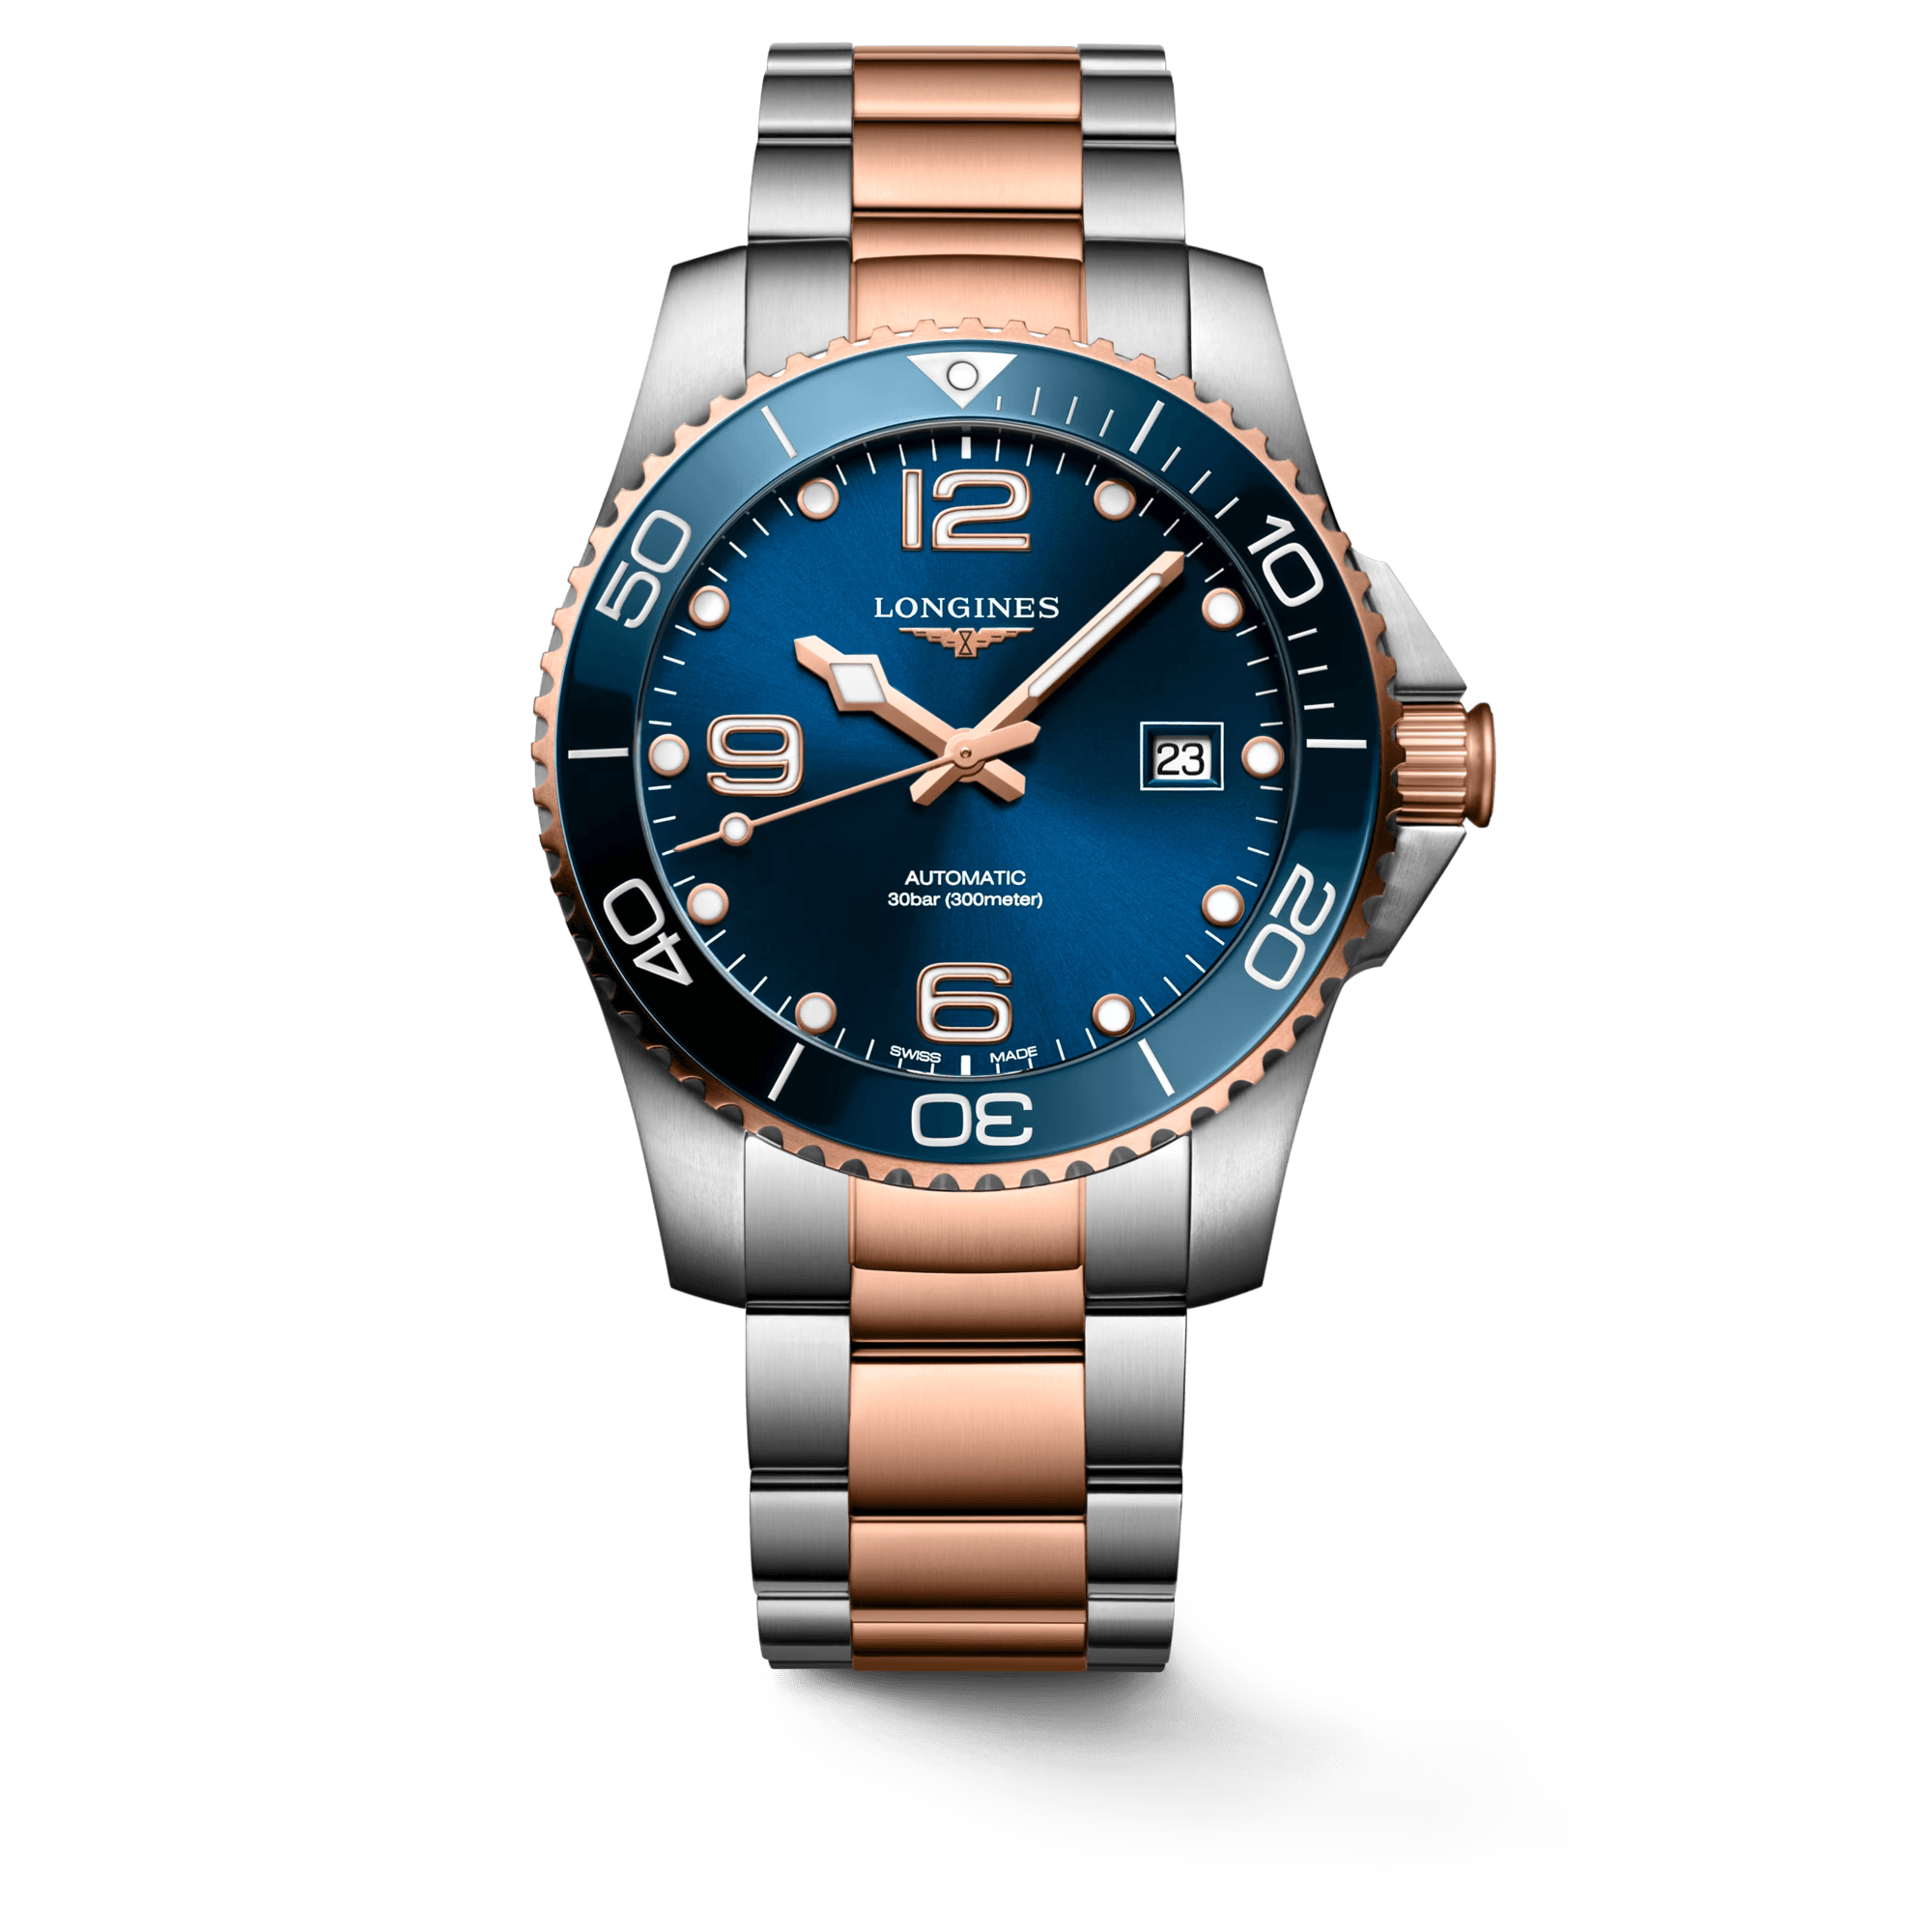 Longines Hydroconquest Automatic Men's Watch L37813987